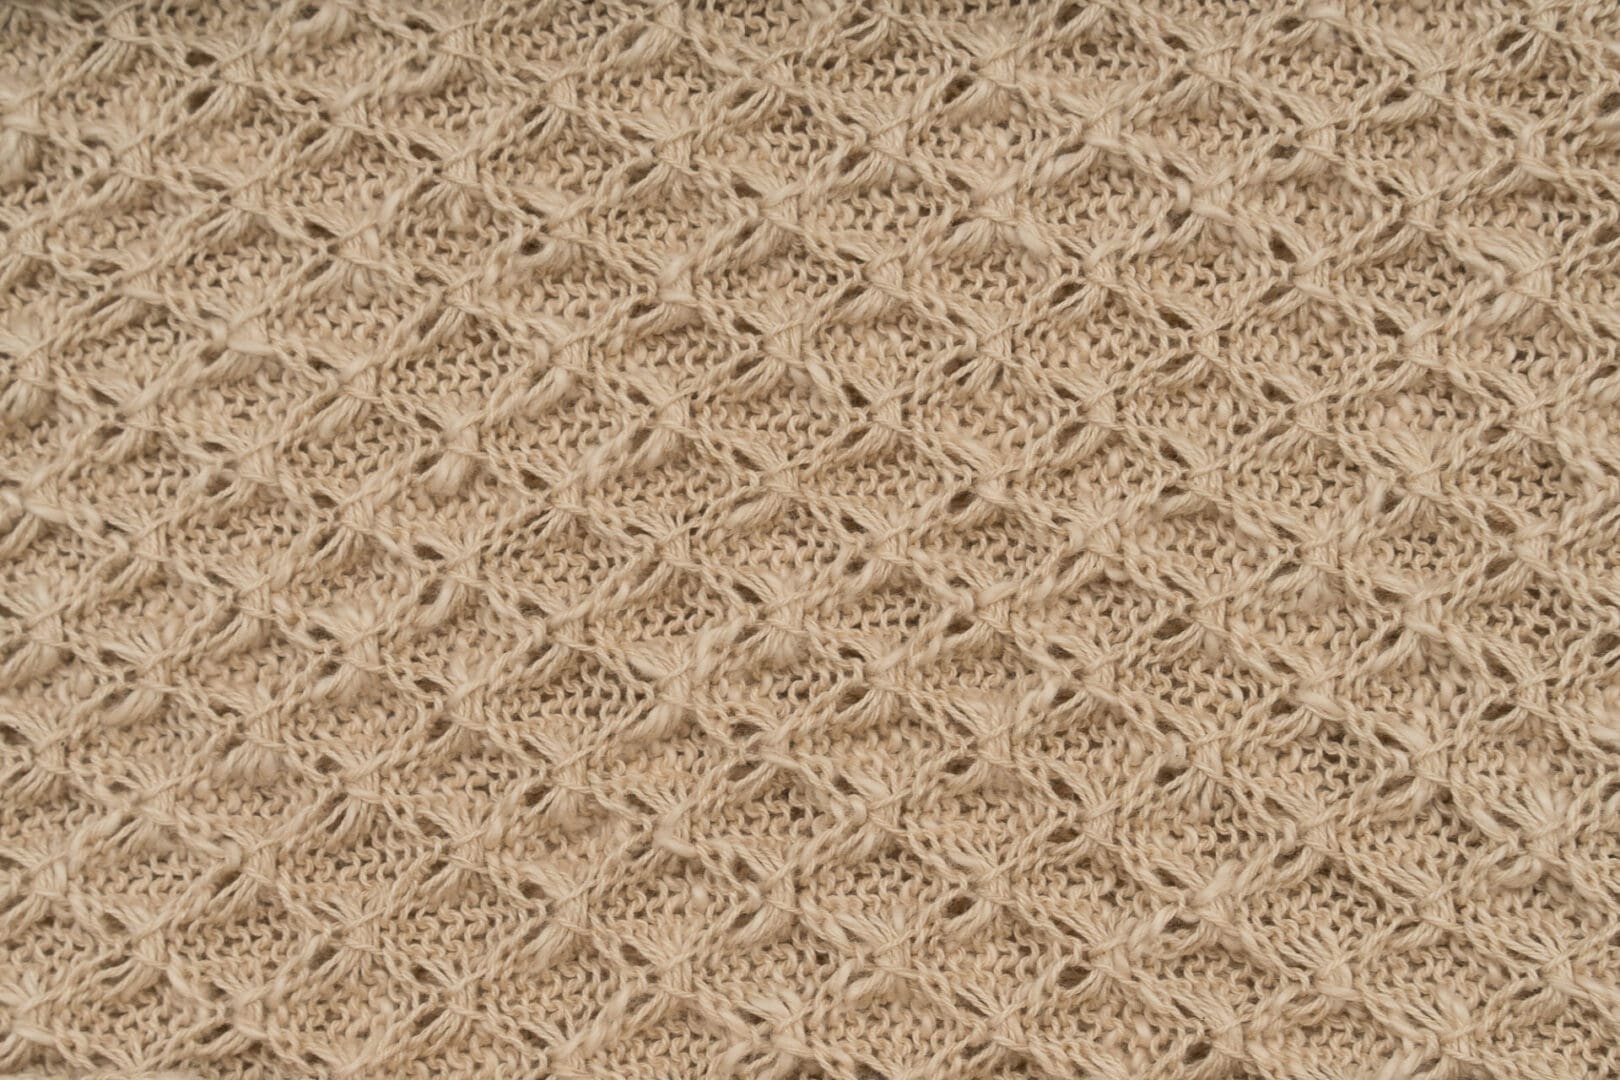 Handmade Cream Lace Cowl Fabric